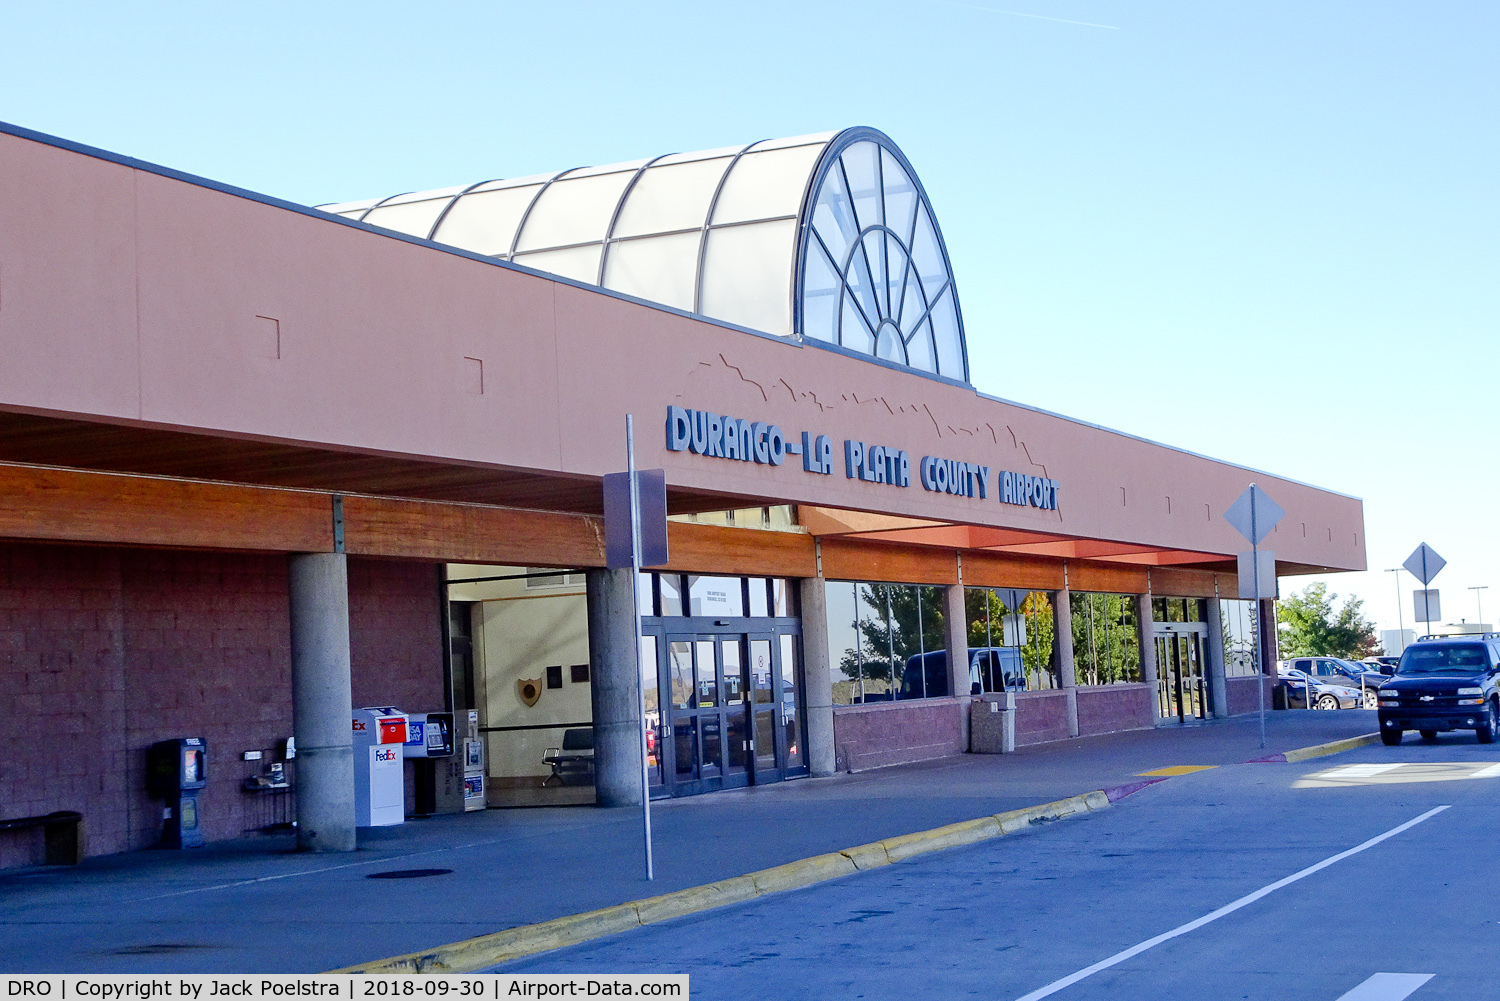 Durango-la Plata County Airport (DRO) - Passenger Terminal of Durango-La Plata County Airport